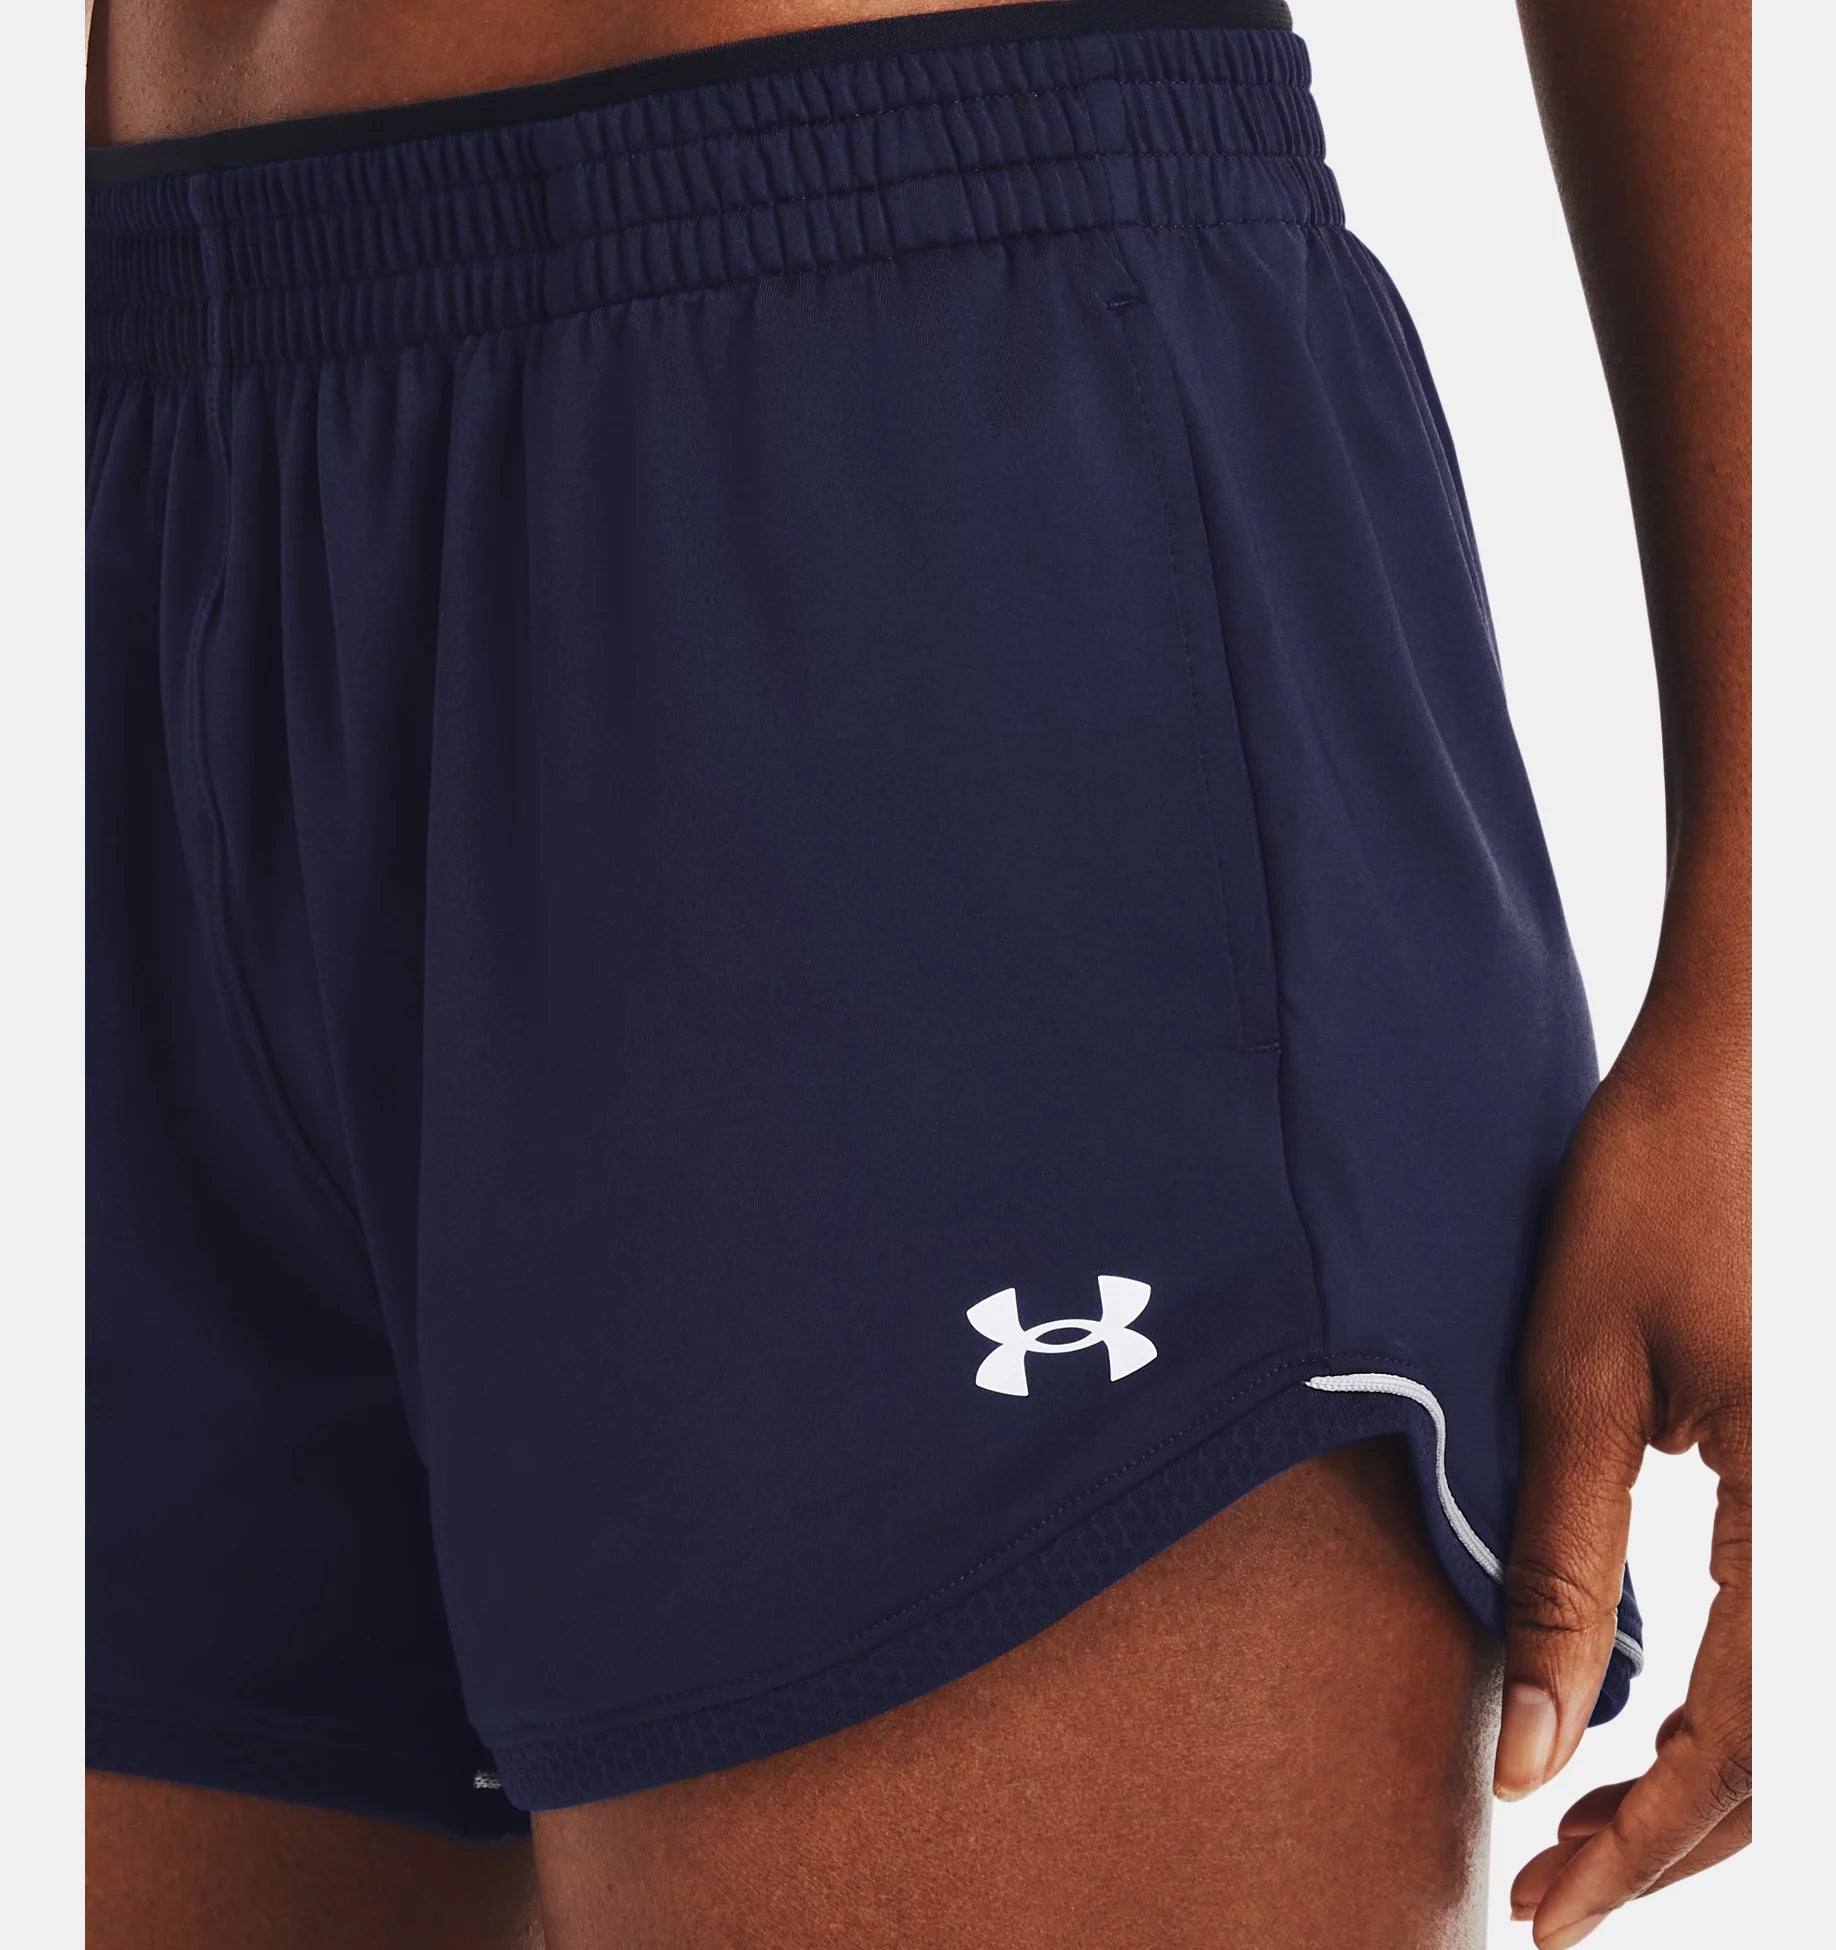 UA W's Knit Shorts